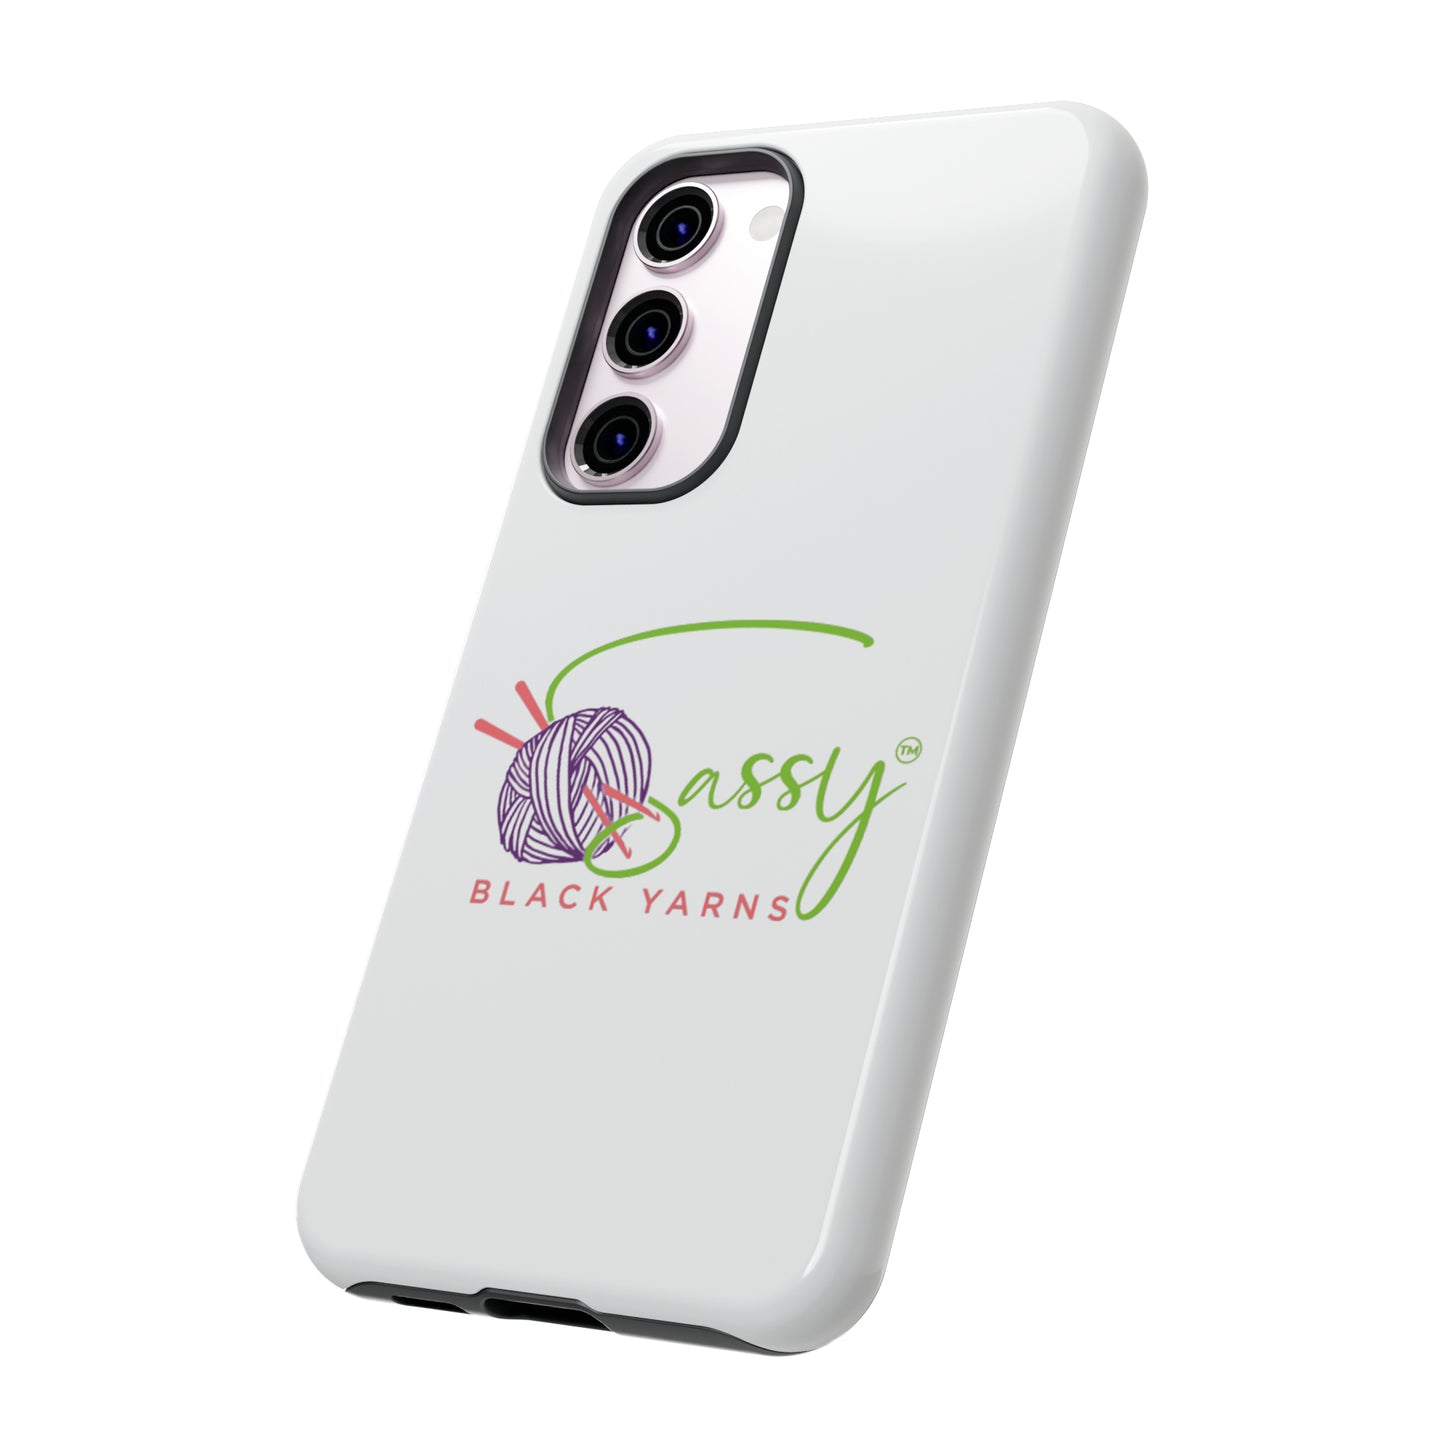 Sassy Black Yarns - Tough Phone Cases